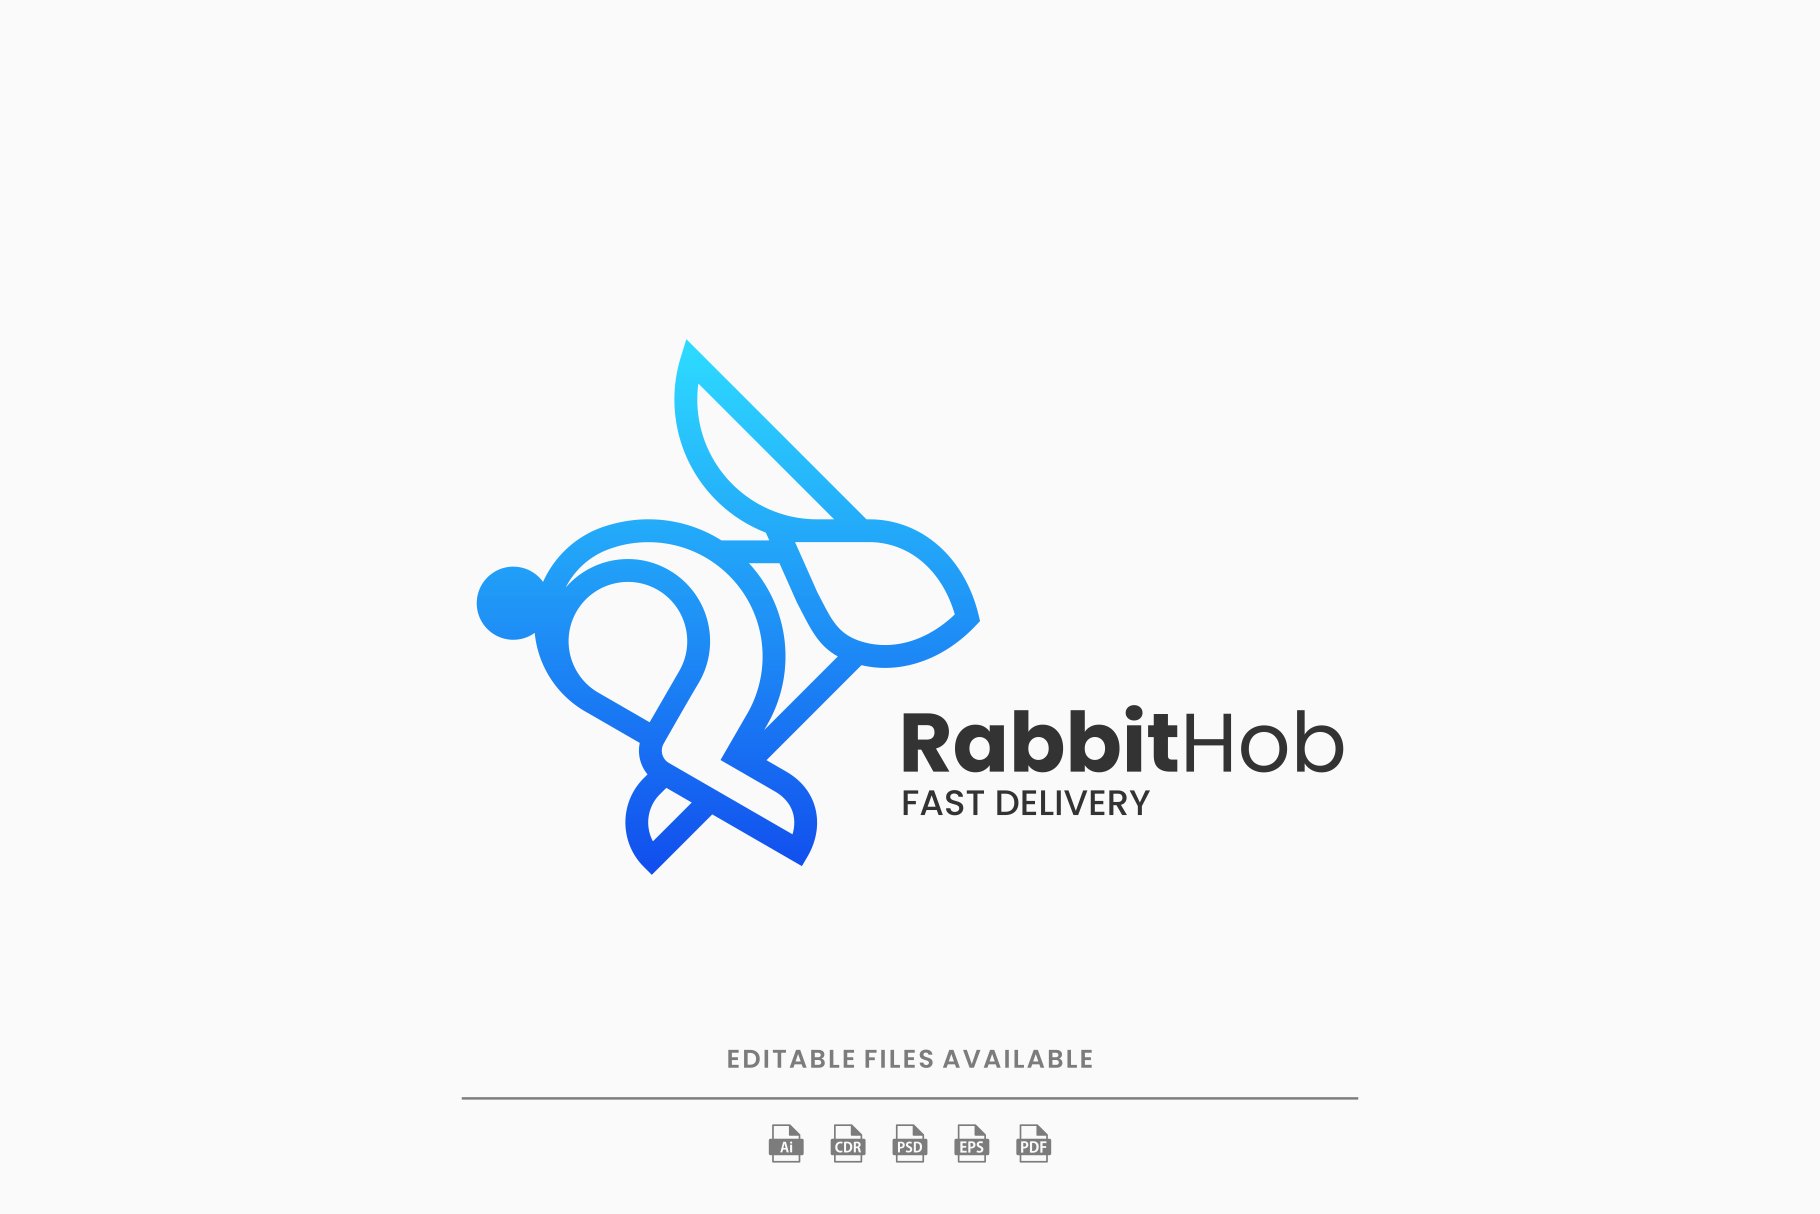 Rabbit Hop Line Art Logo cover image.